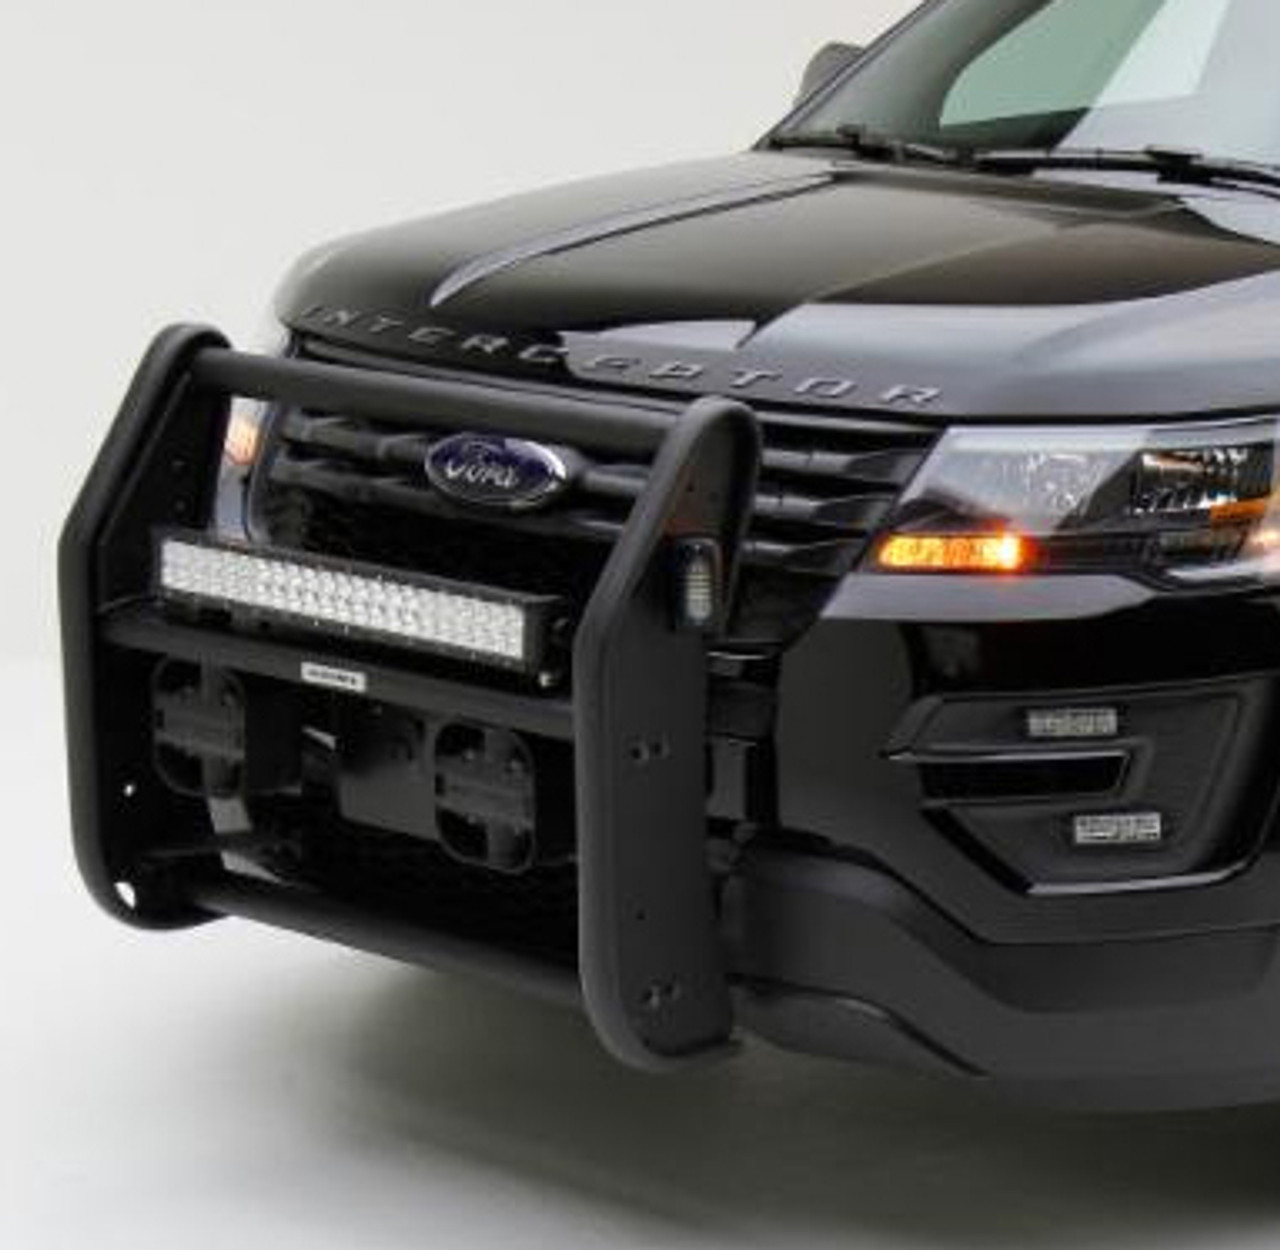 Go Rhino Push Bar Brush Guard For Ford Police Interceptor Utility Suv